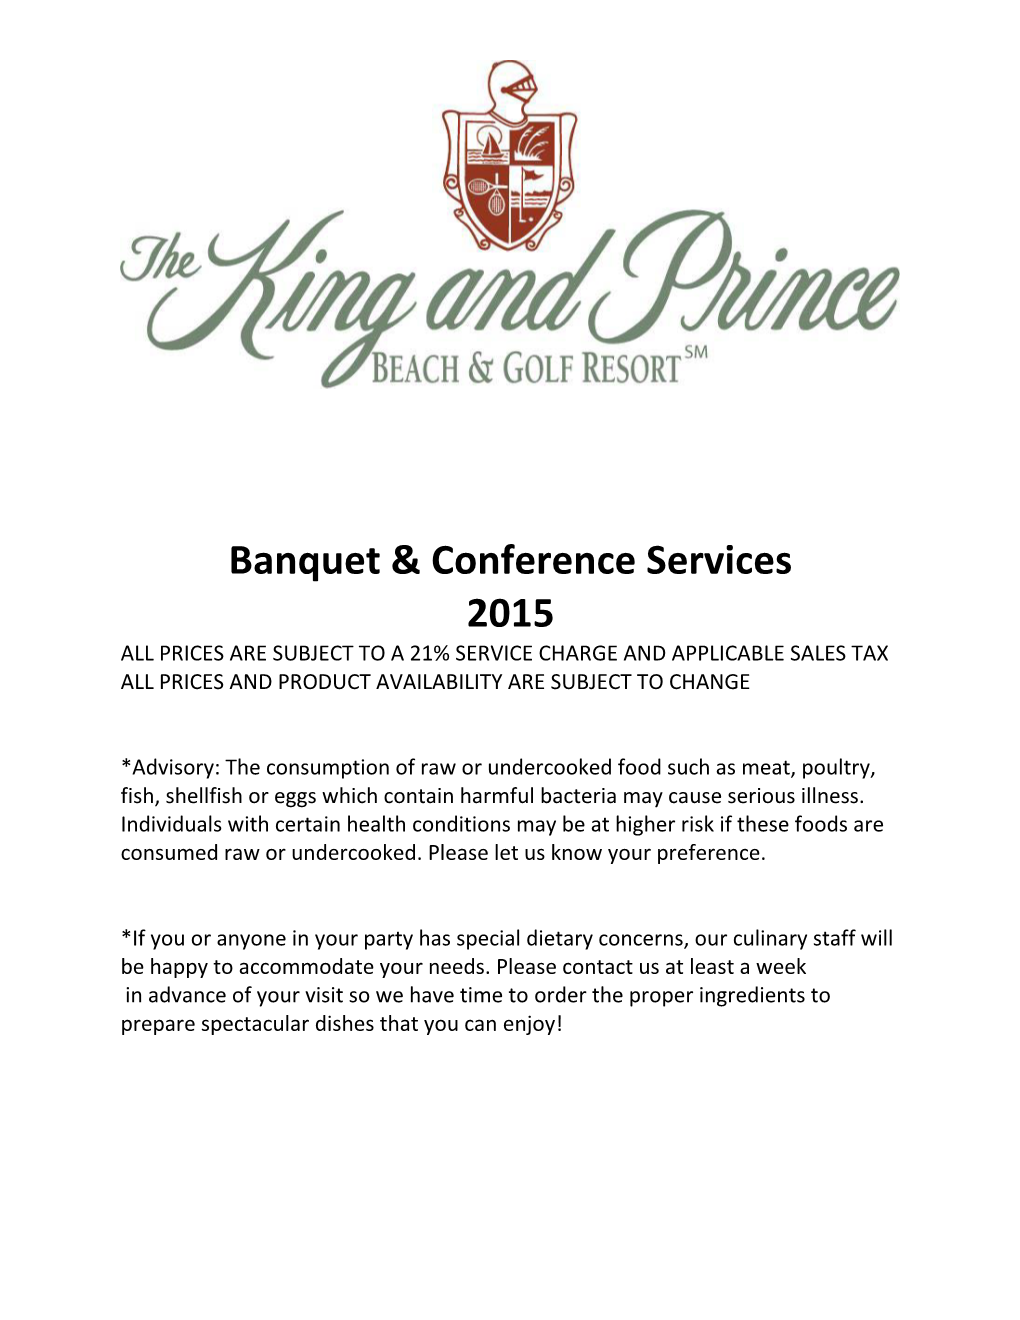 Banquet & Conference Services 2015